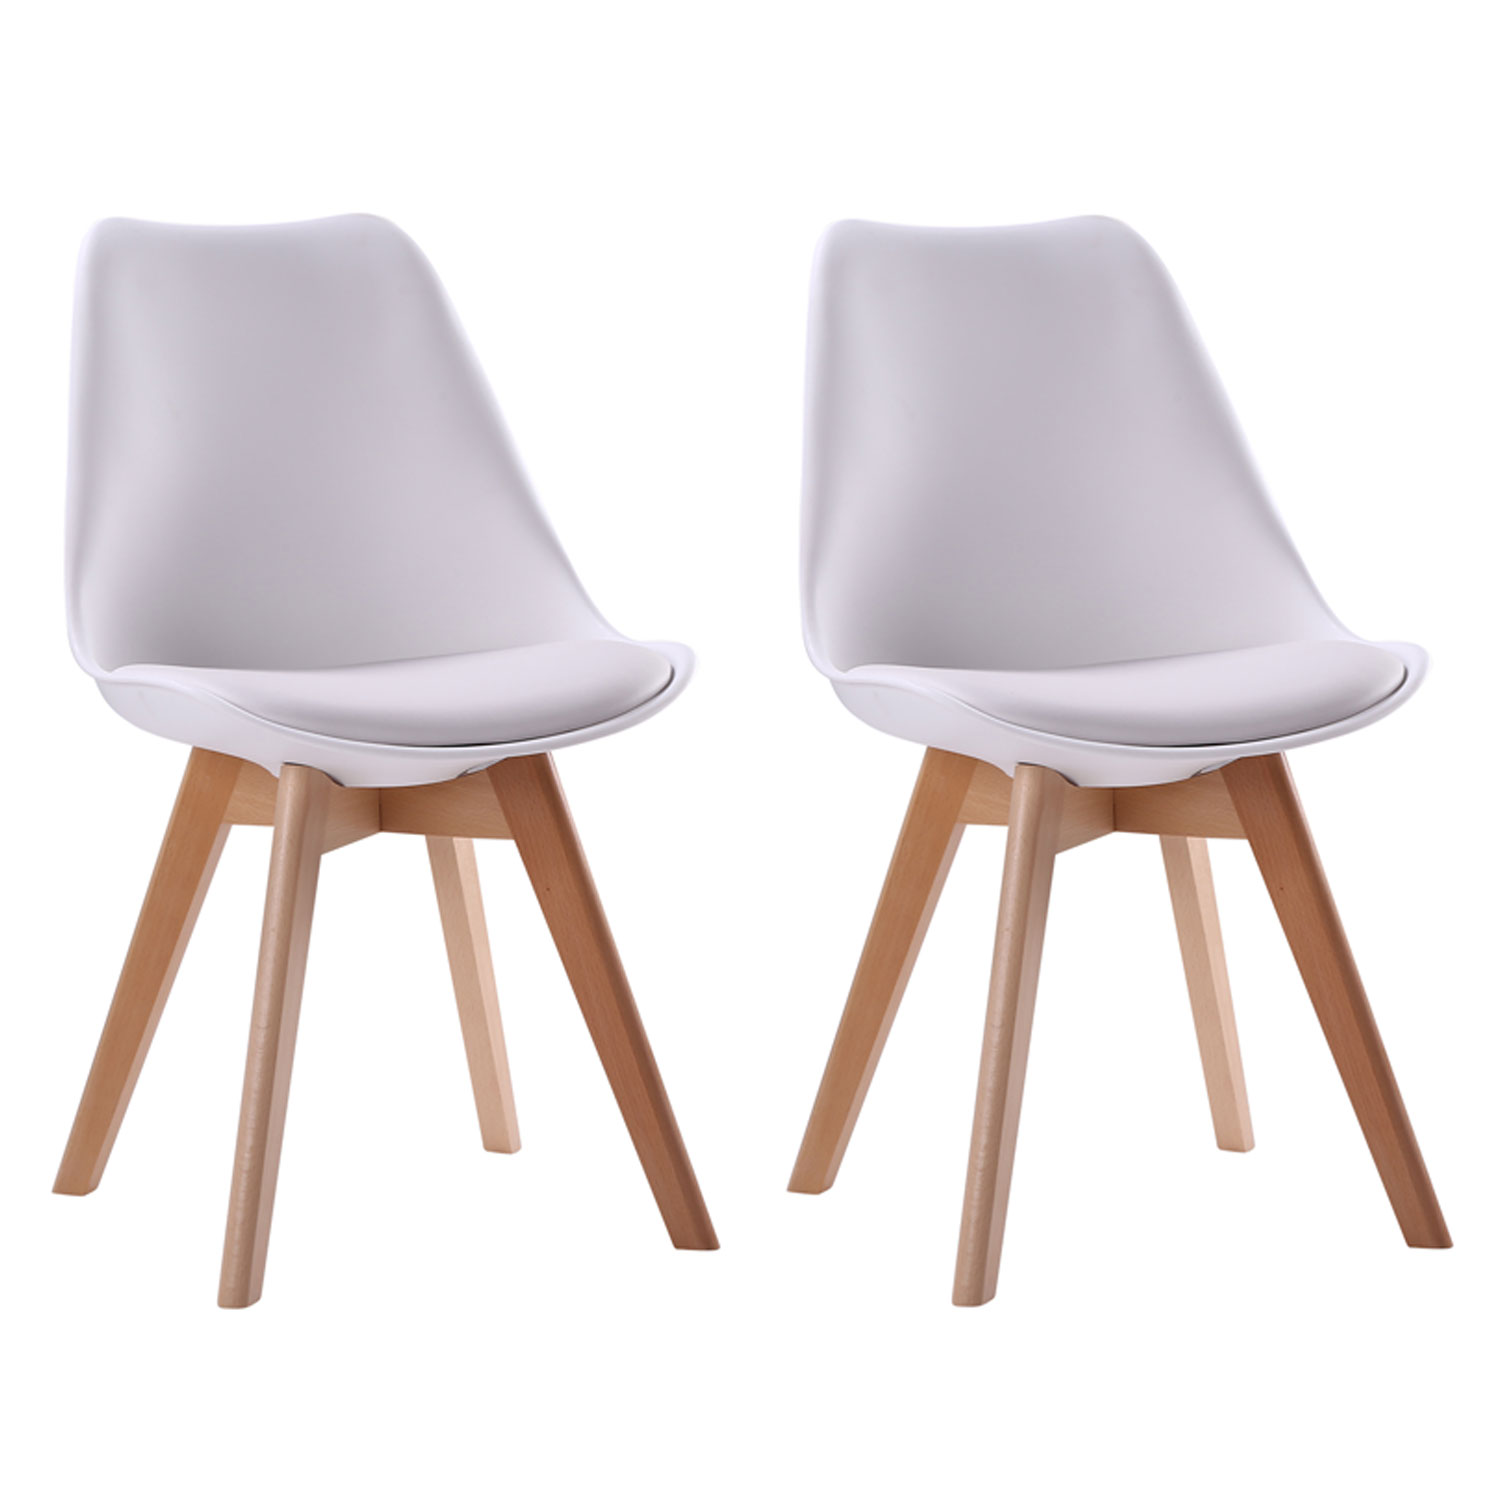 Conjunto de 2 cadeiras escandinavas brancas NORA com almofada